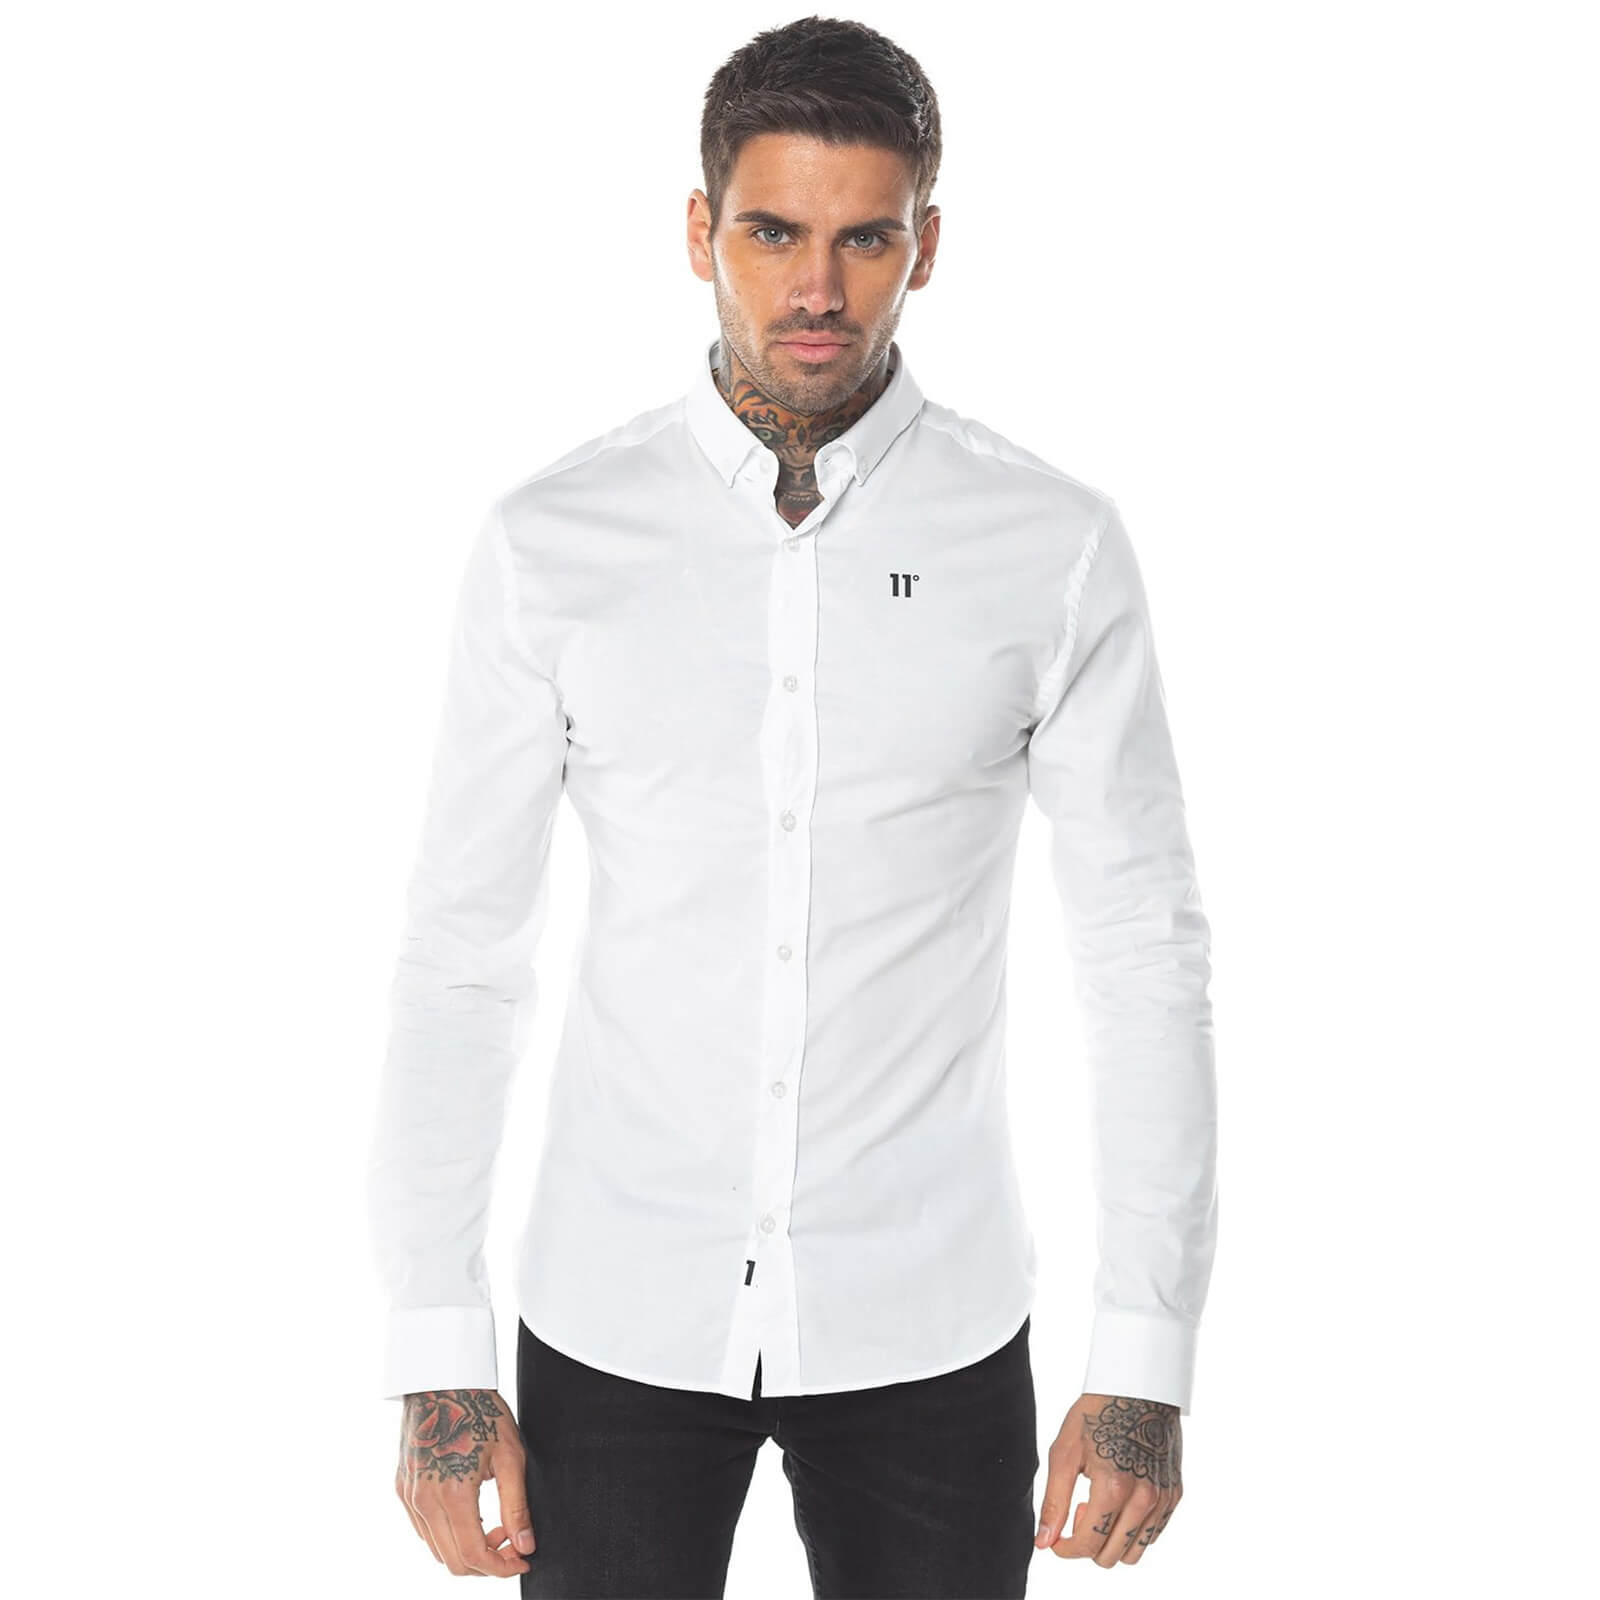 11 degrees long sleeve contrast logo shirt – white - l